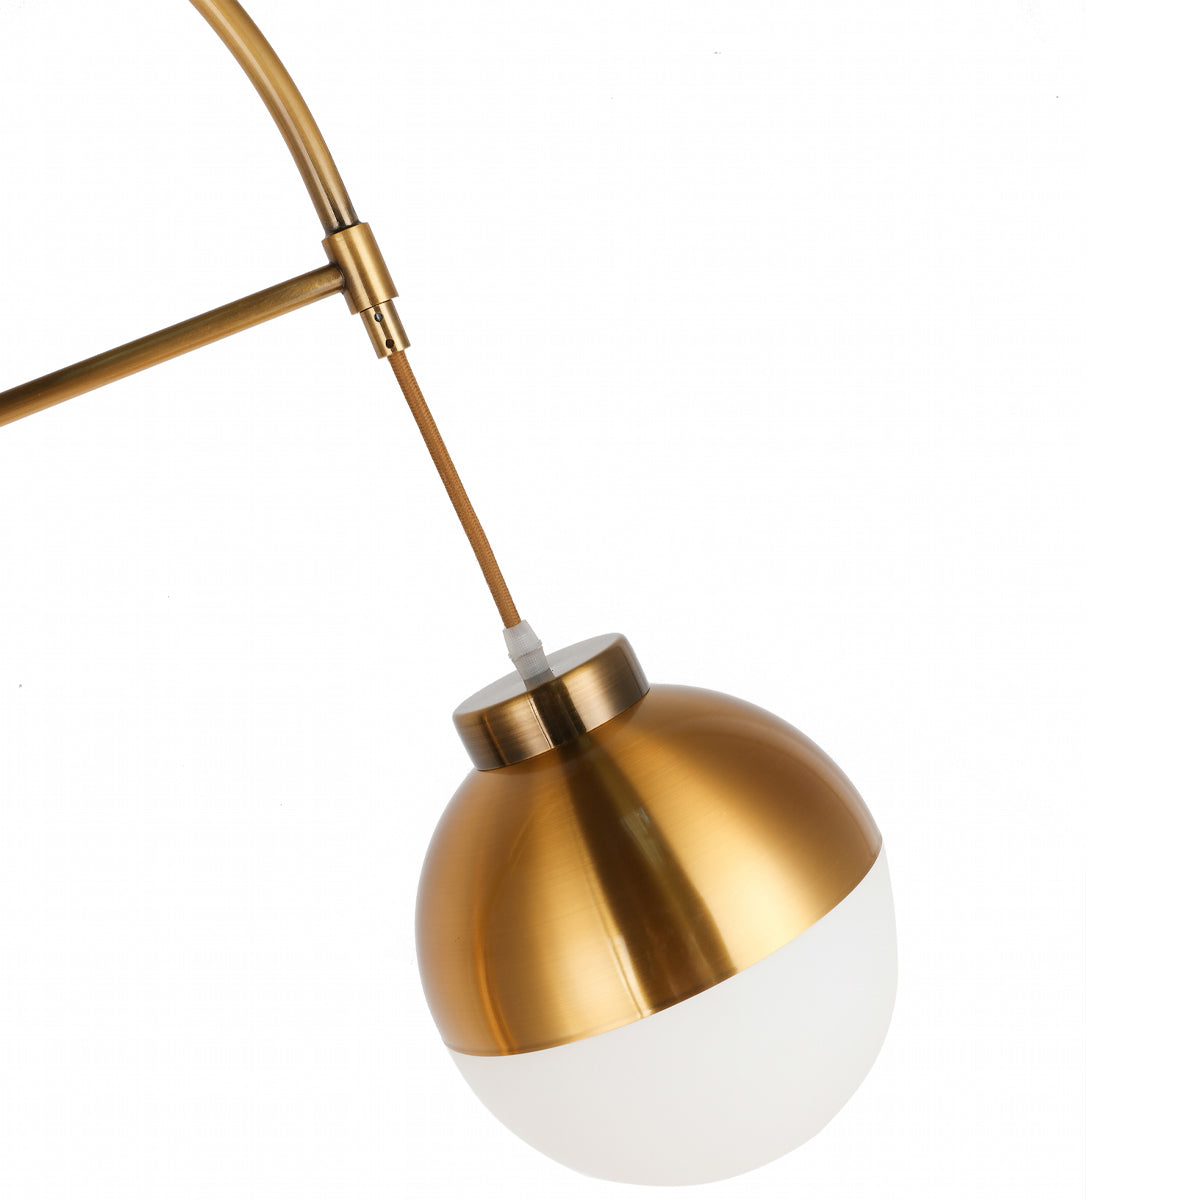 CGC ASHTON Gold Curved Floor Lamp